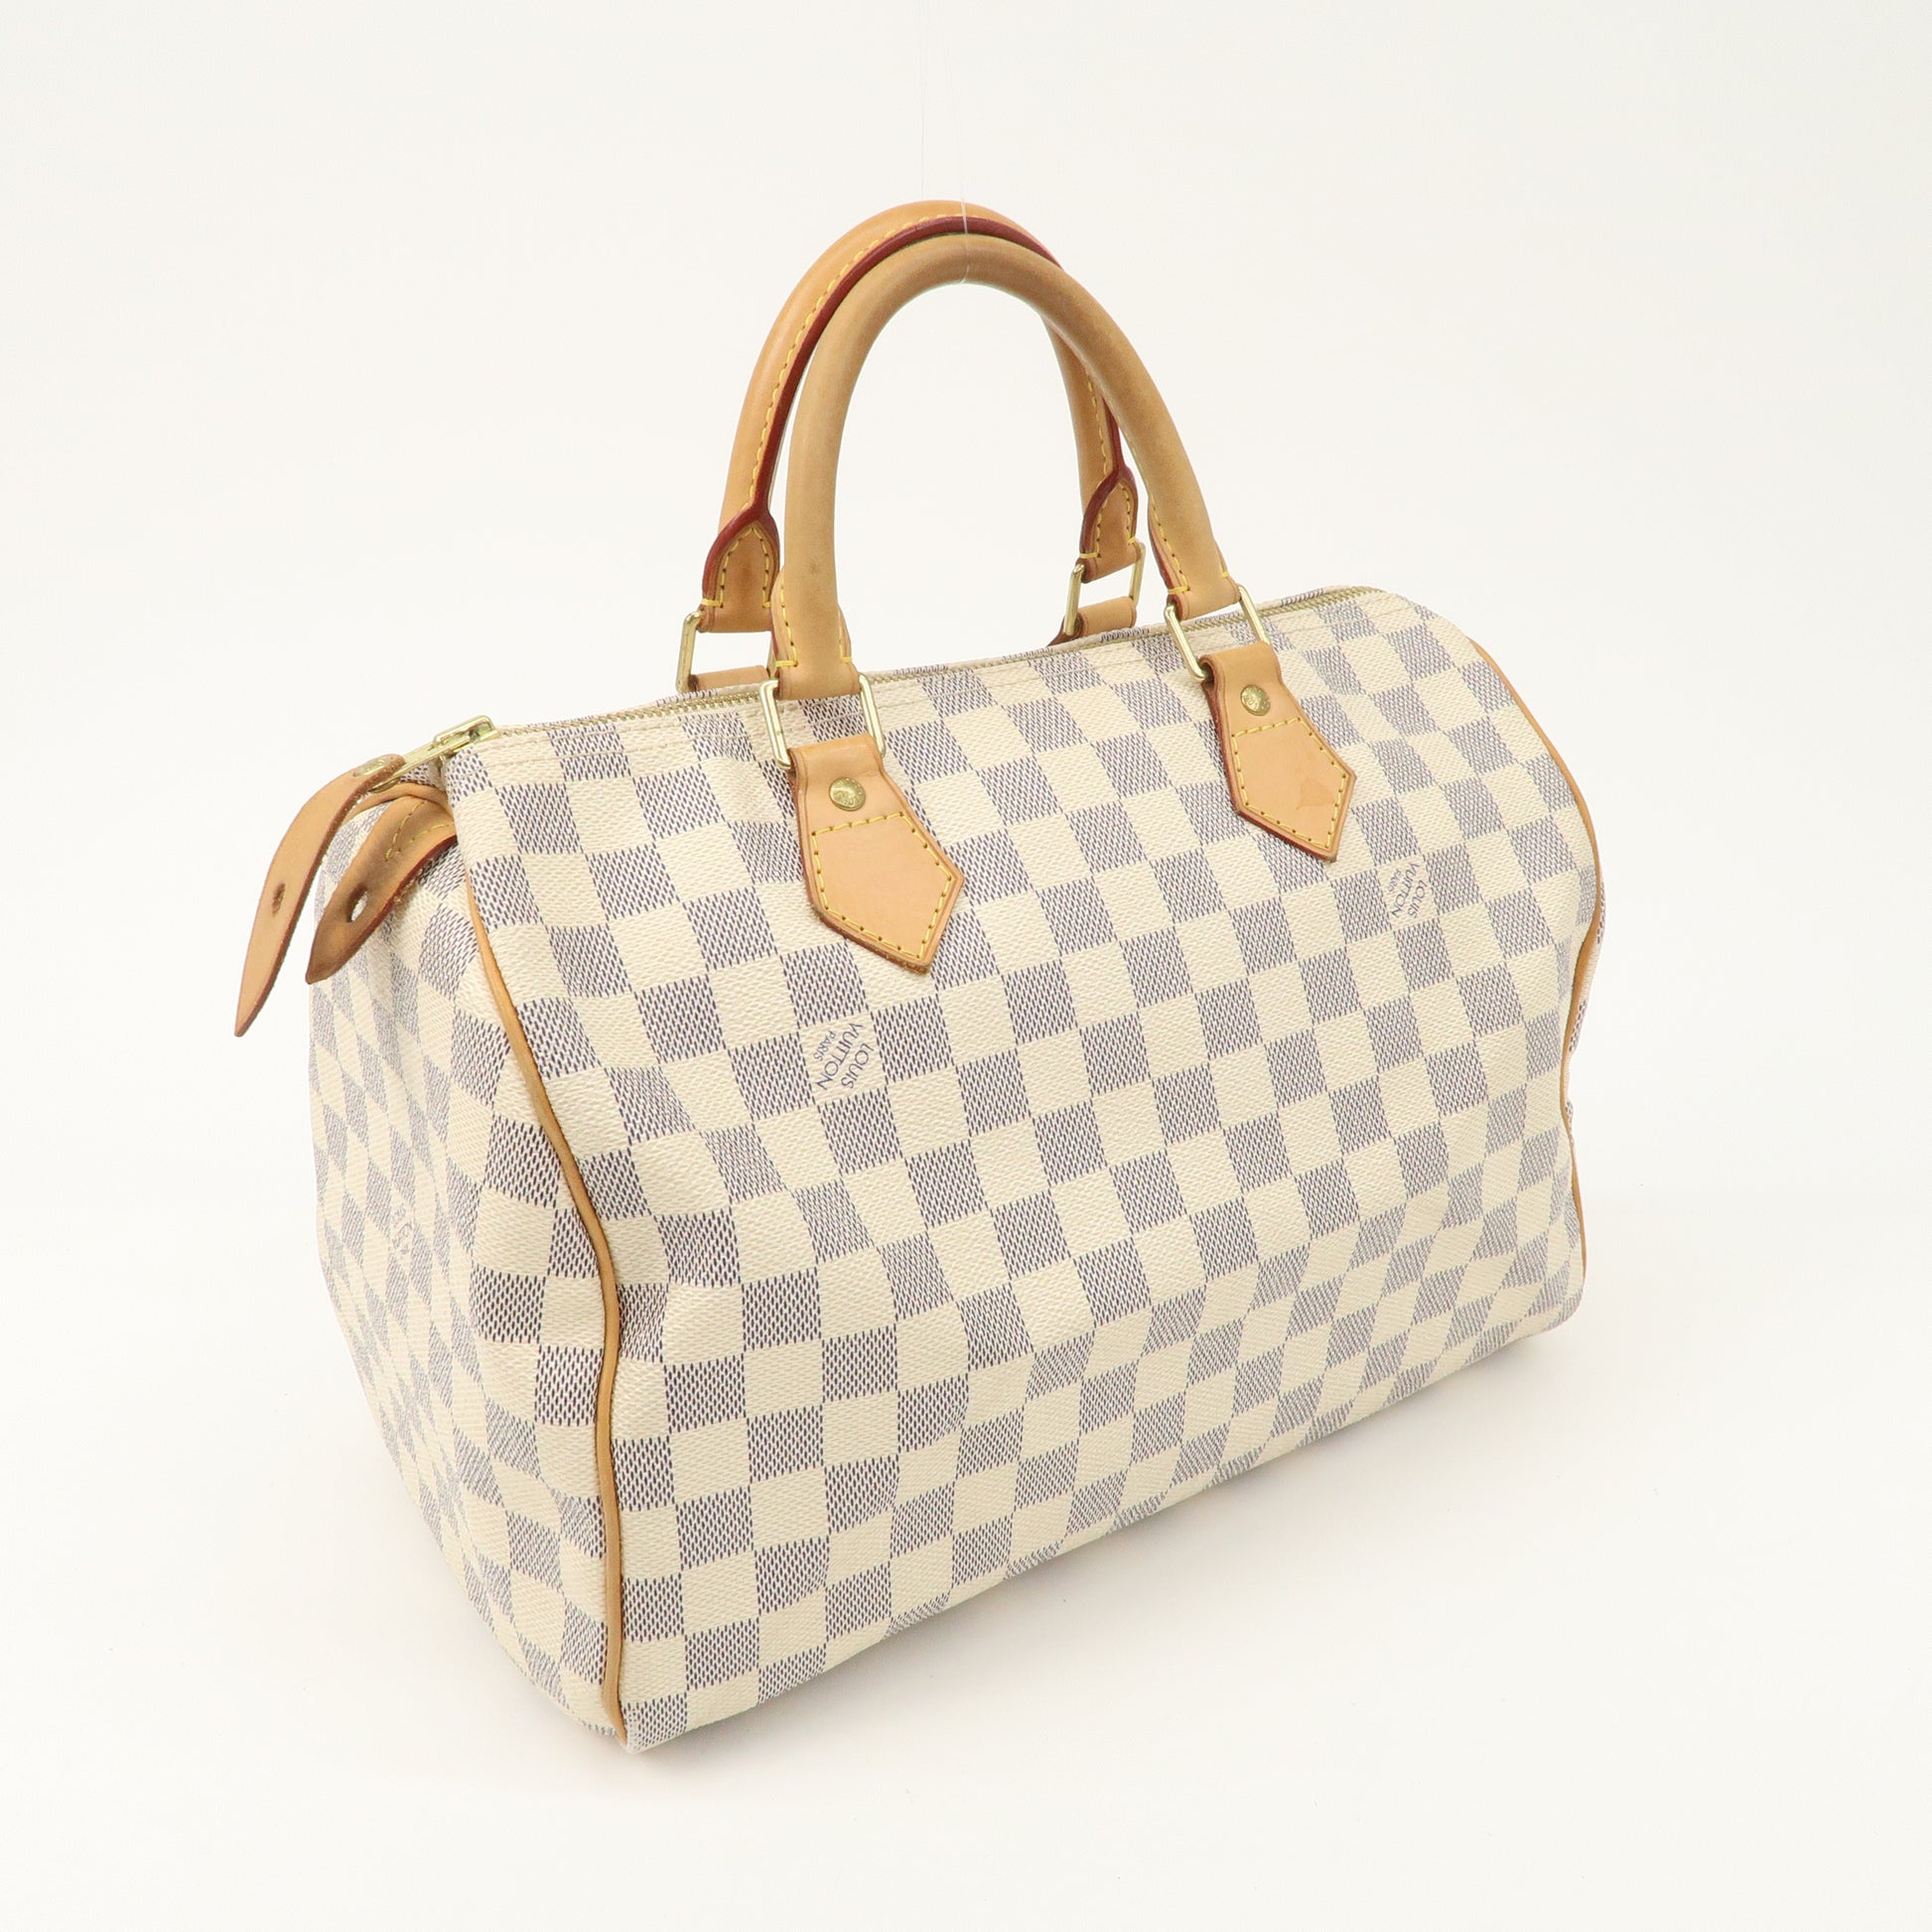 Authentic LOUIS VUITTON Speedy 30 Damier Azur Boston Hand Bag Purse #49899